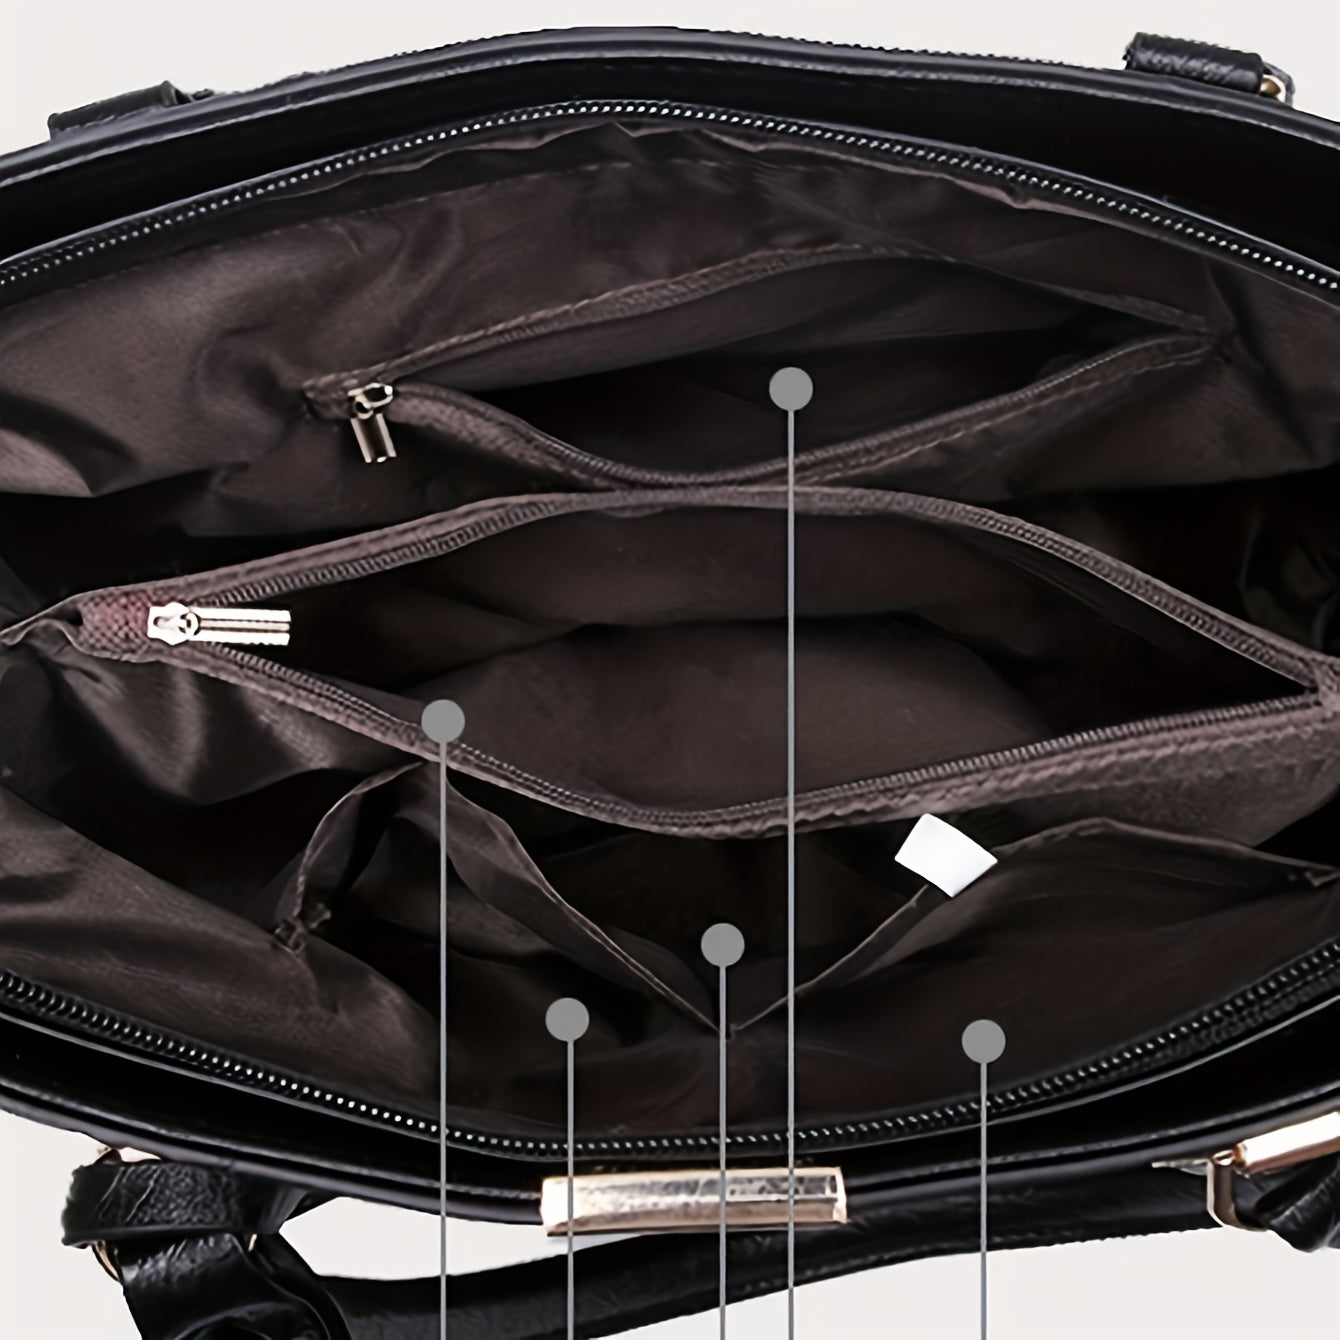 Fashion Top Handle Satchel Bag, Elegant Crossbody Tote Bag, Women's Casual Handbag, Shoulder Bag & Purse